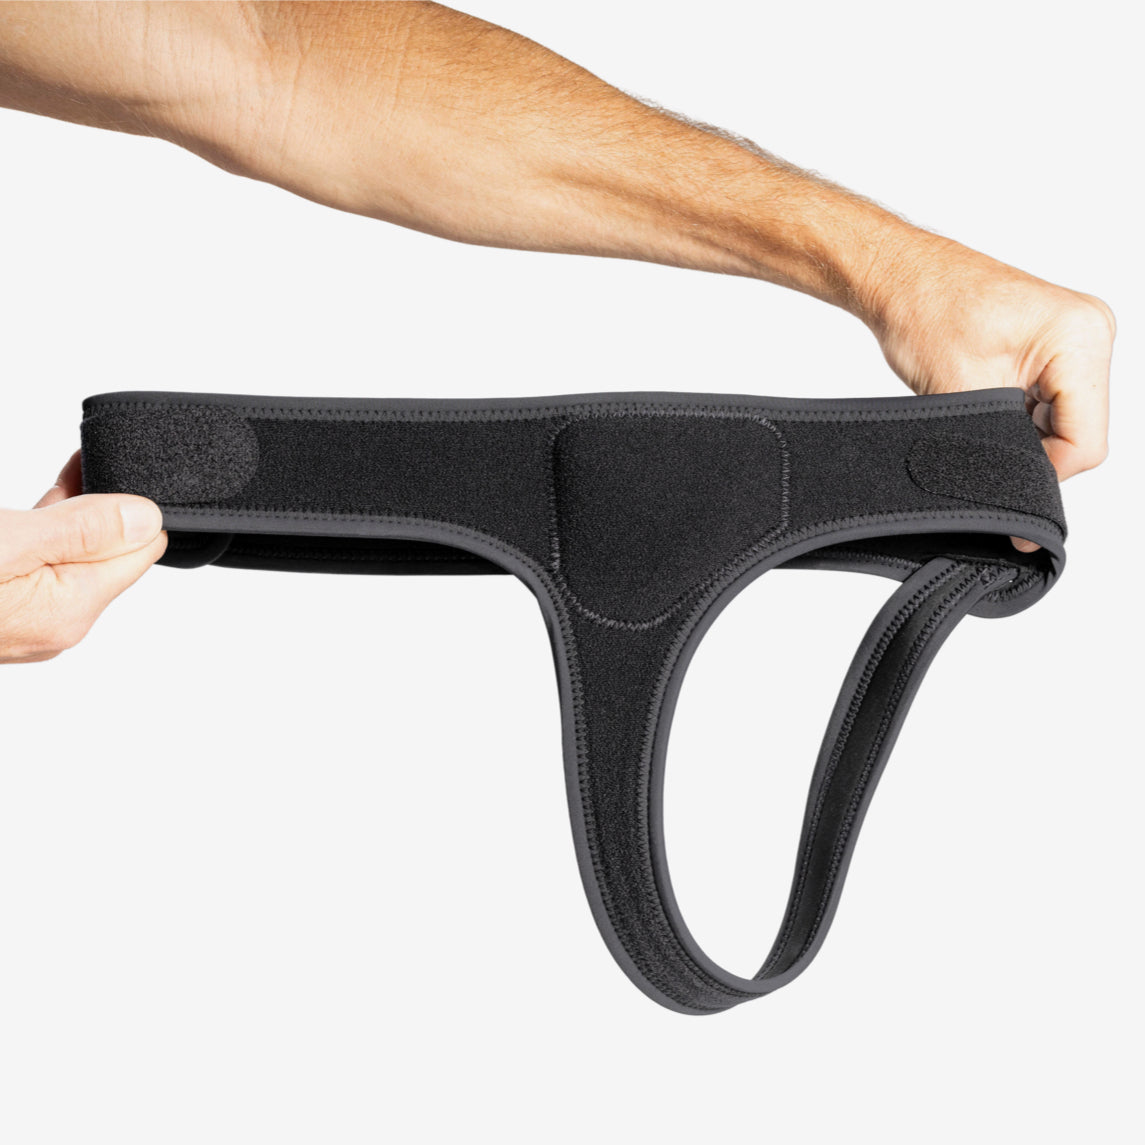 Hands holding minimalist single side hernia belt